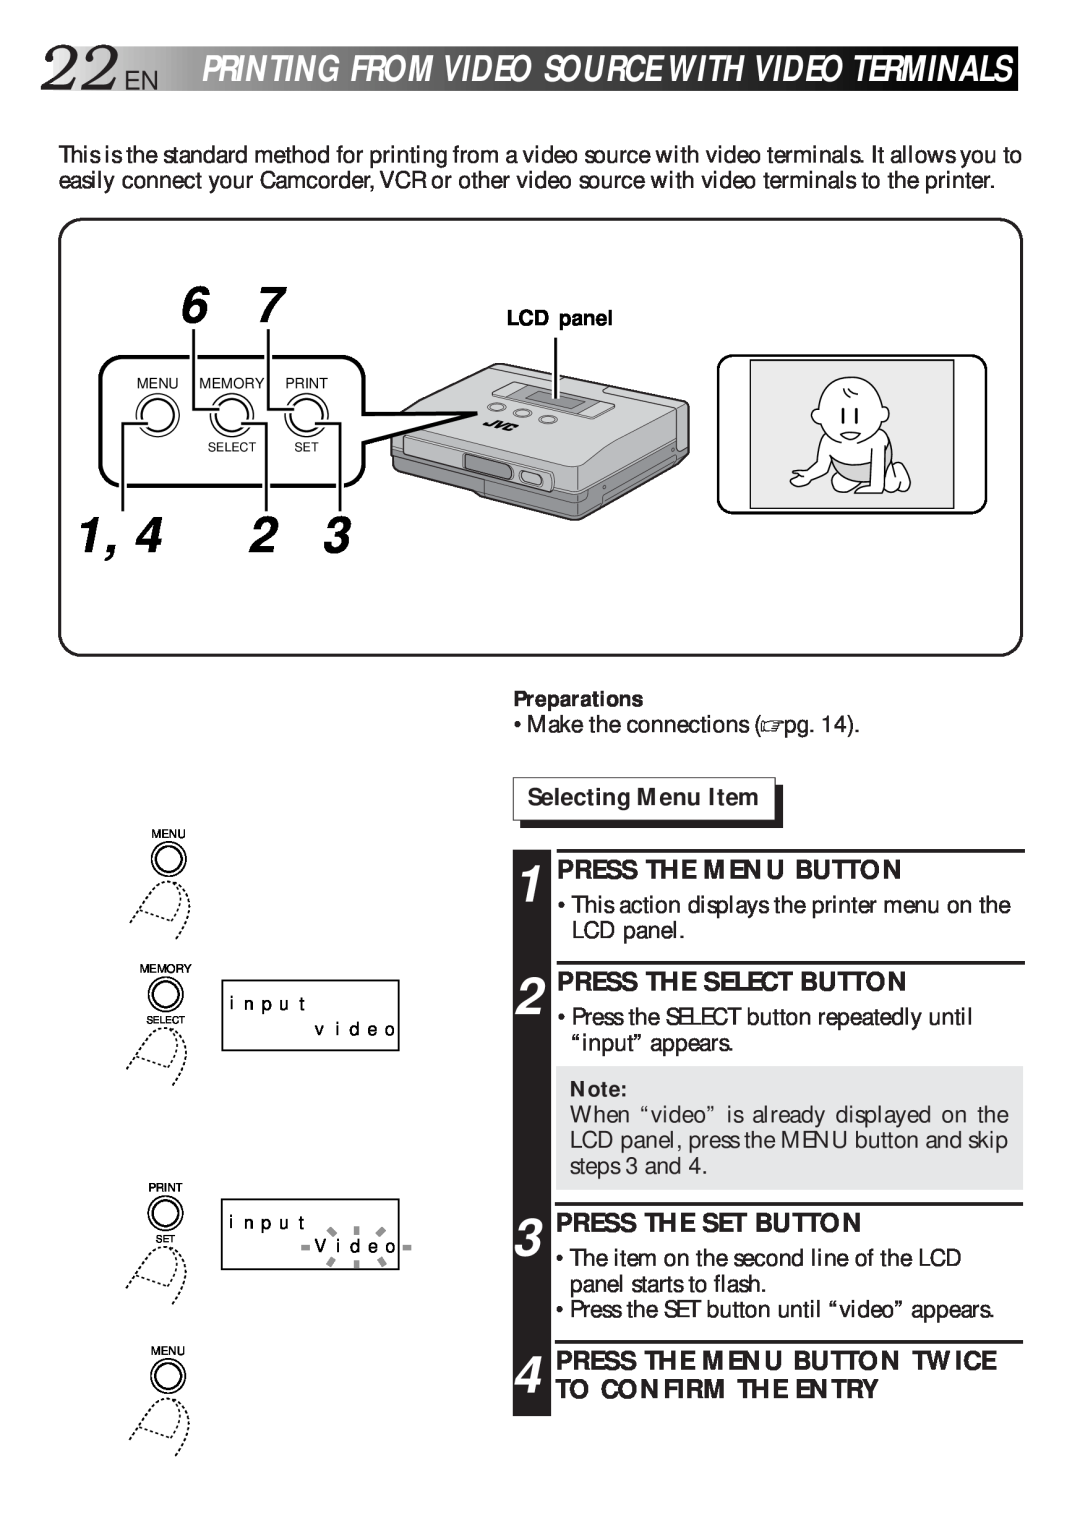 JVC GV-HT1 manual 22EN, Printingfromvideosourcewithvideoterminals, Selecting Menu Item, Press The Menu Button 